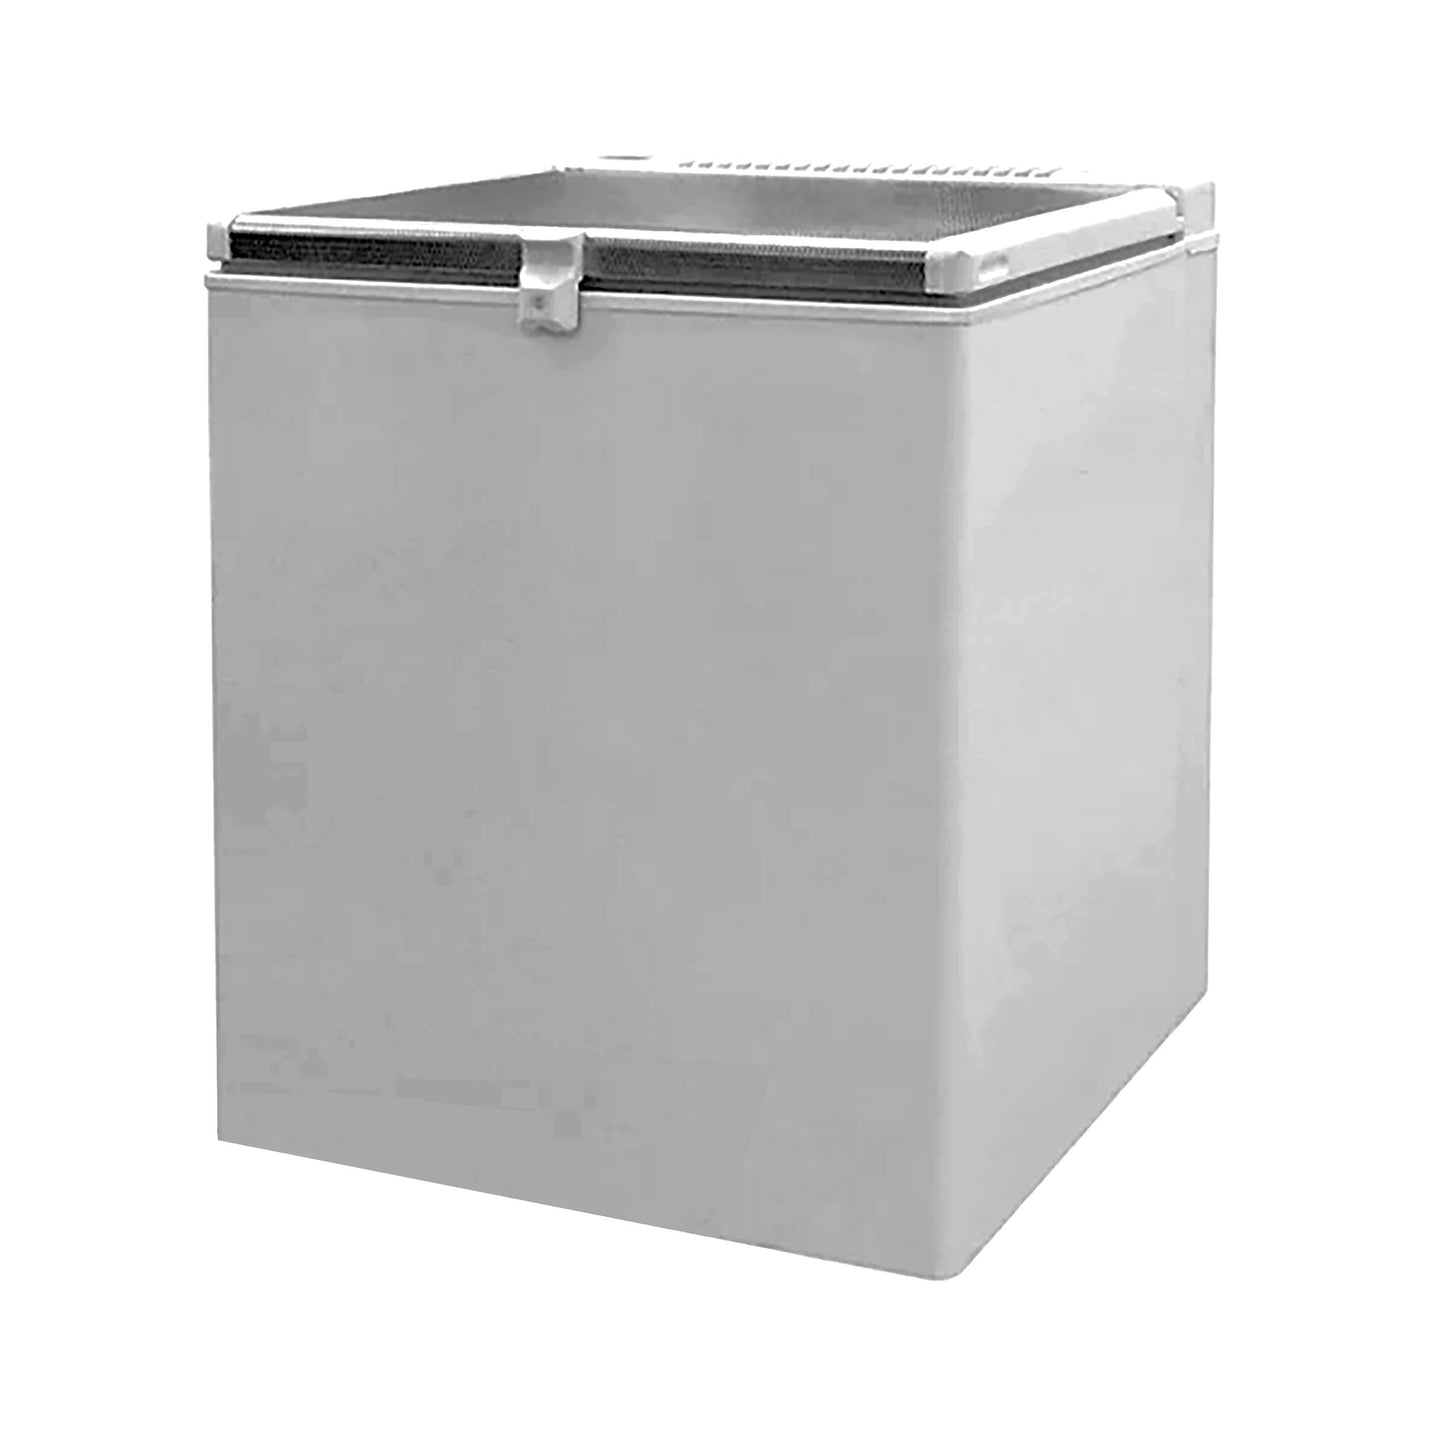 Cold Factor Gas Chest Freezer 120L - White